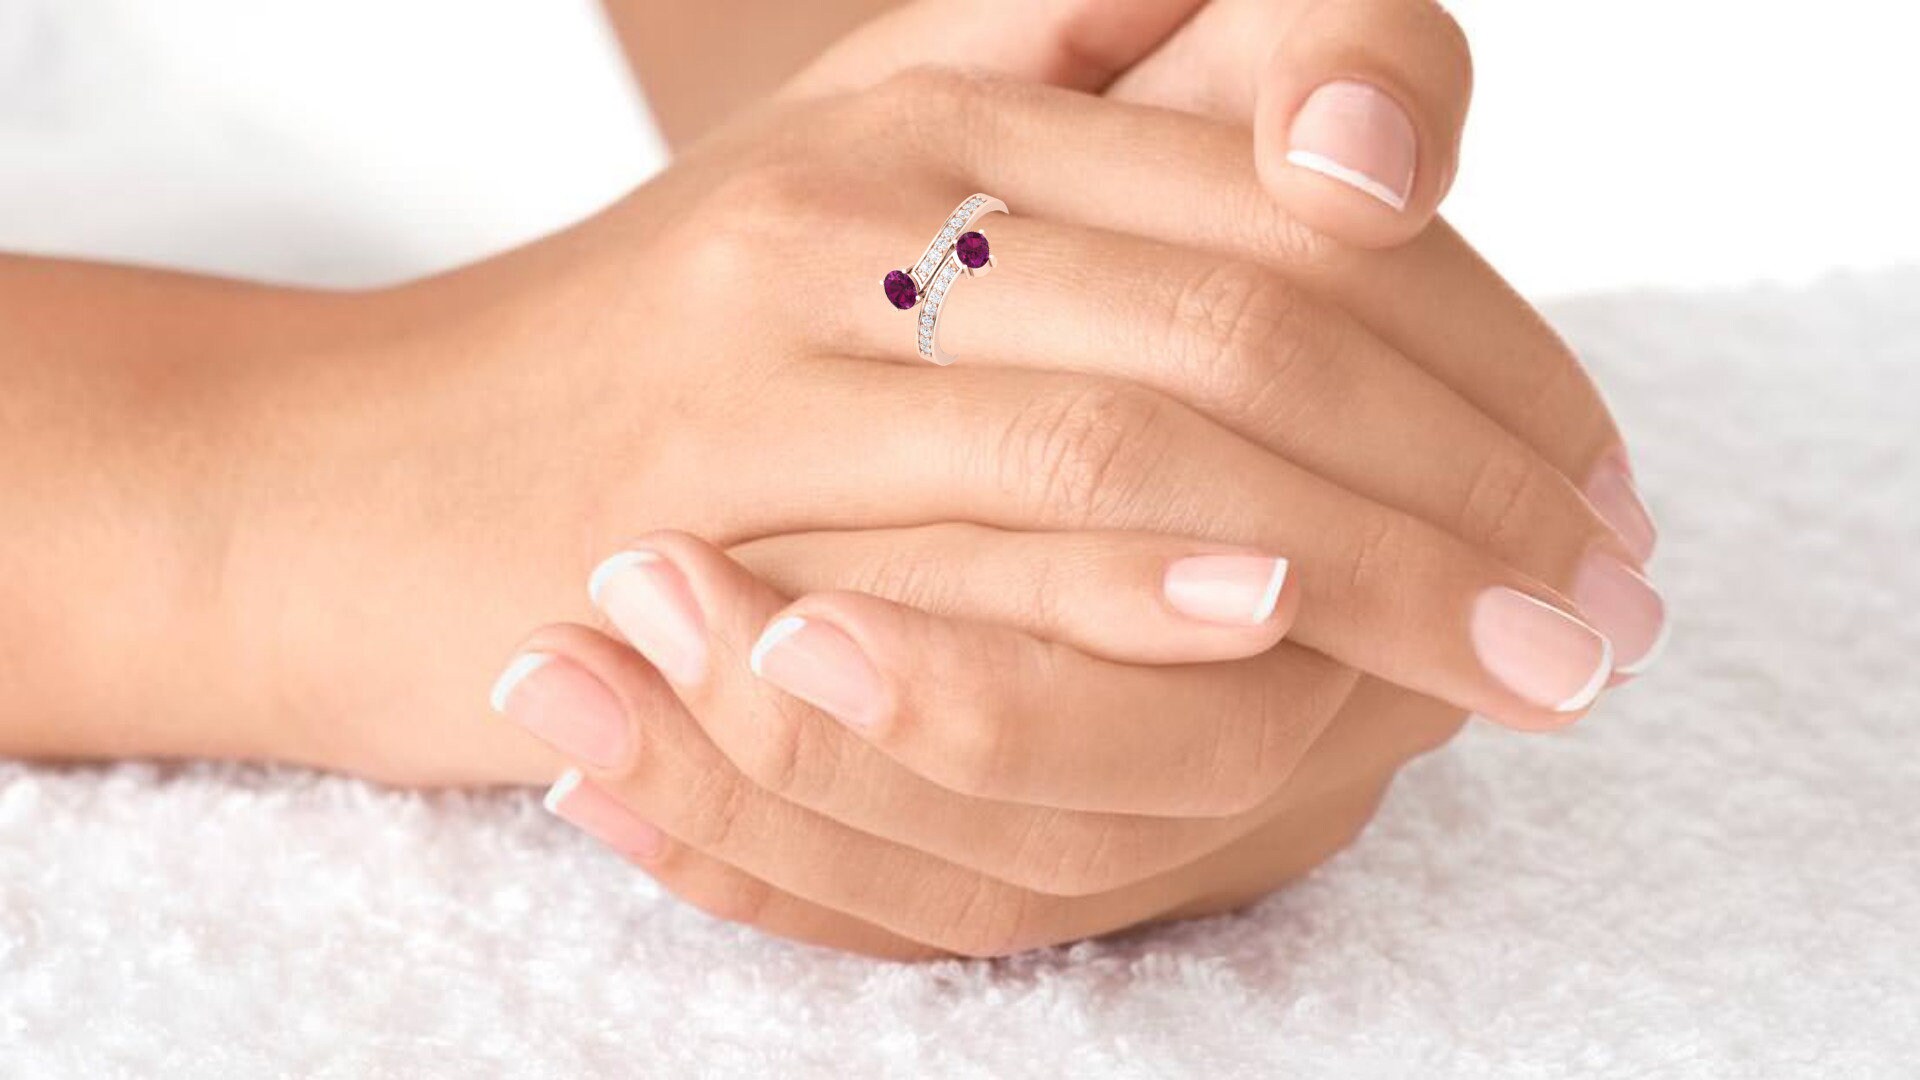 Dainty 14K Gold Natural Rhodolite Garnet Ring, Everyday Gemstone Ring For Her, Handmade Jewelry For Women, January Birthstone Statement Ring | Save 33% - Rajasthan Living 19